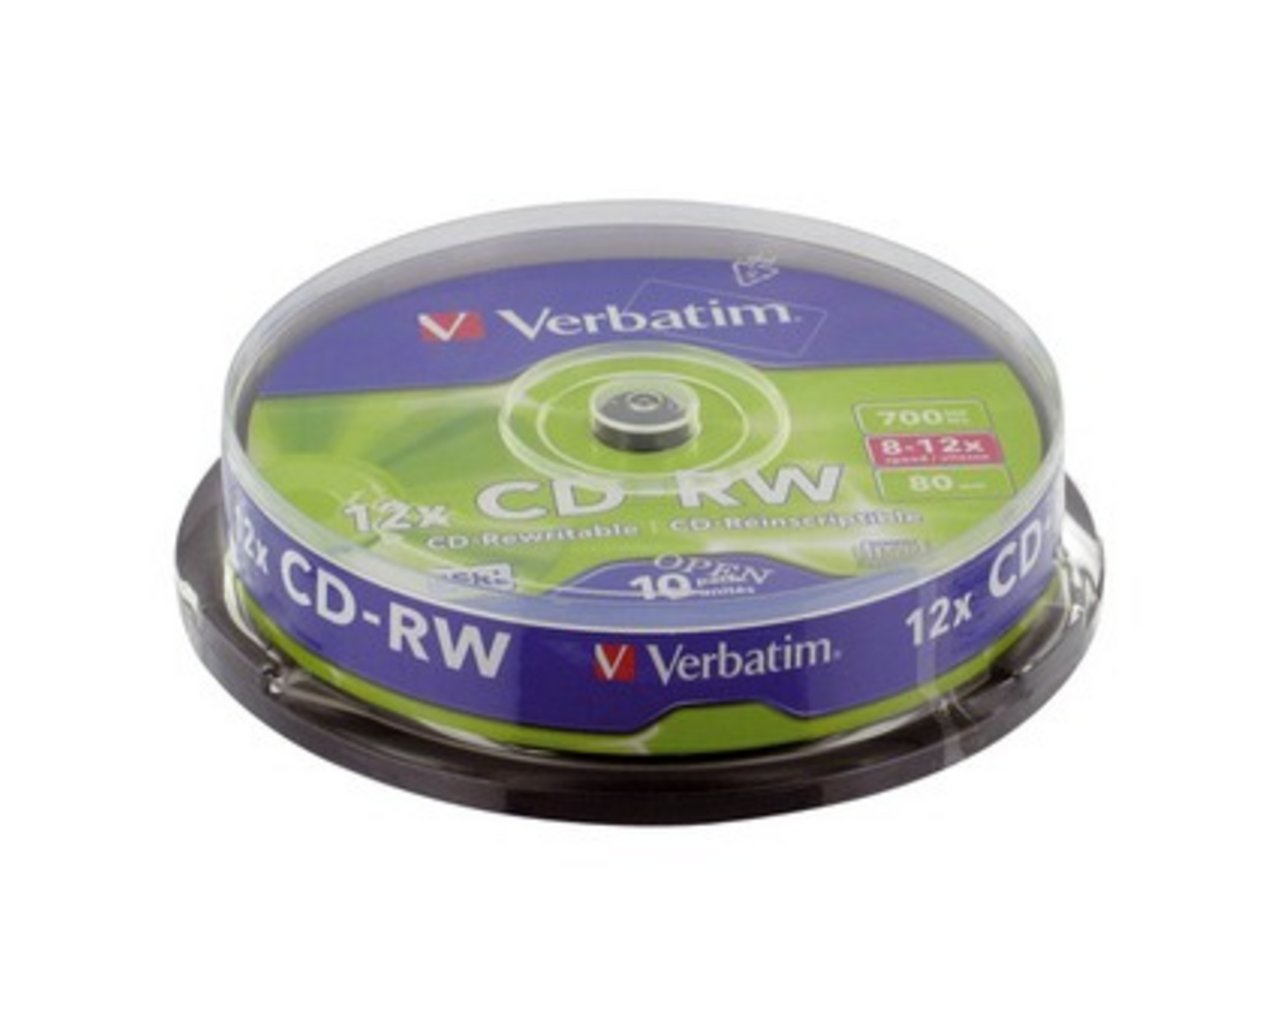 Verbatim CD-RW 8-12x, 10 pièces en cake box